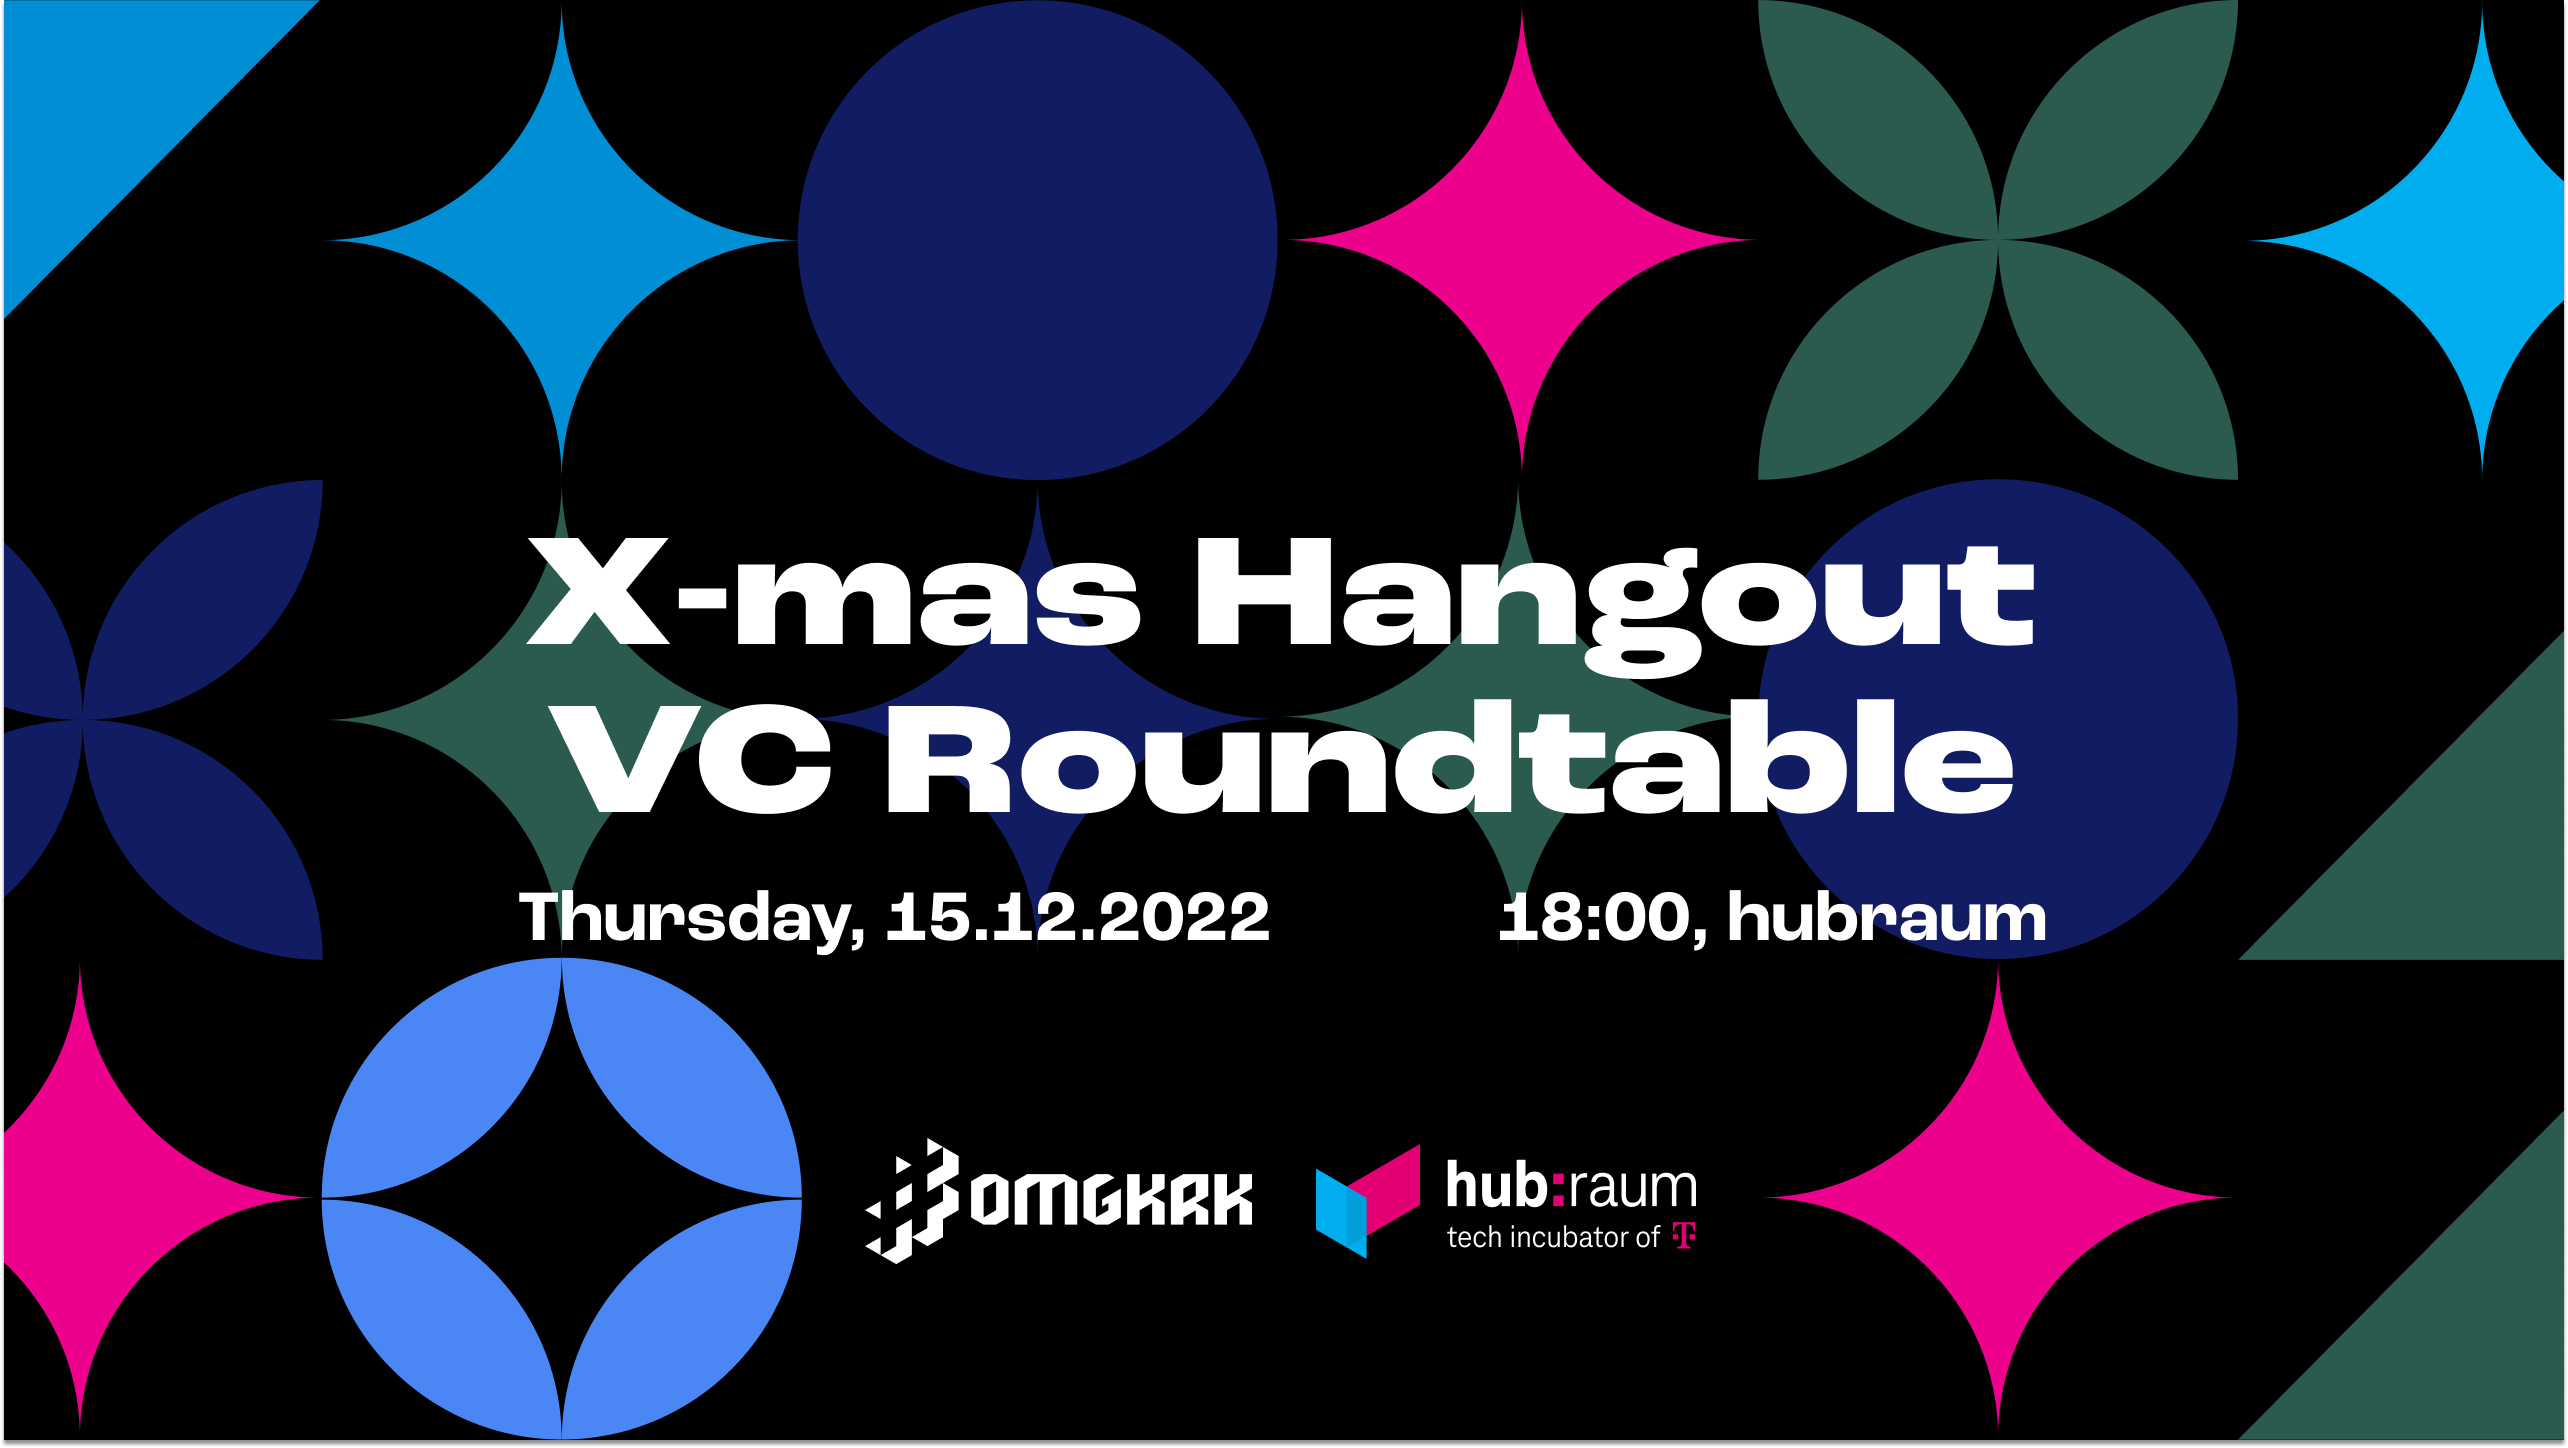 x-mas-hangout-vc-roundtable-grudzien-2022